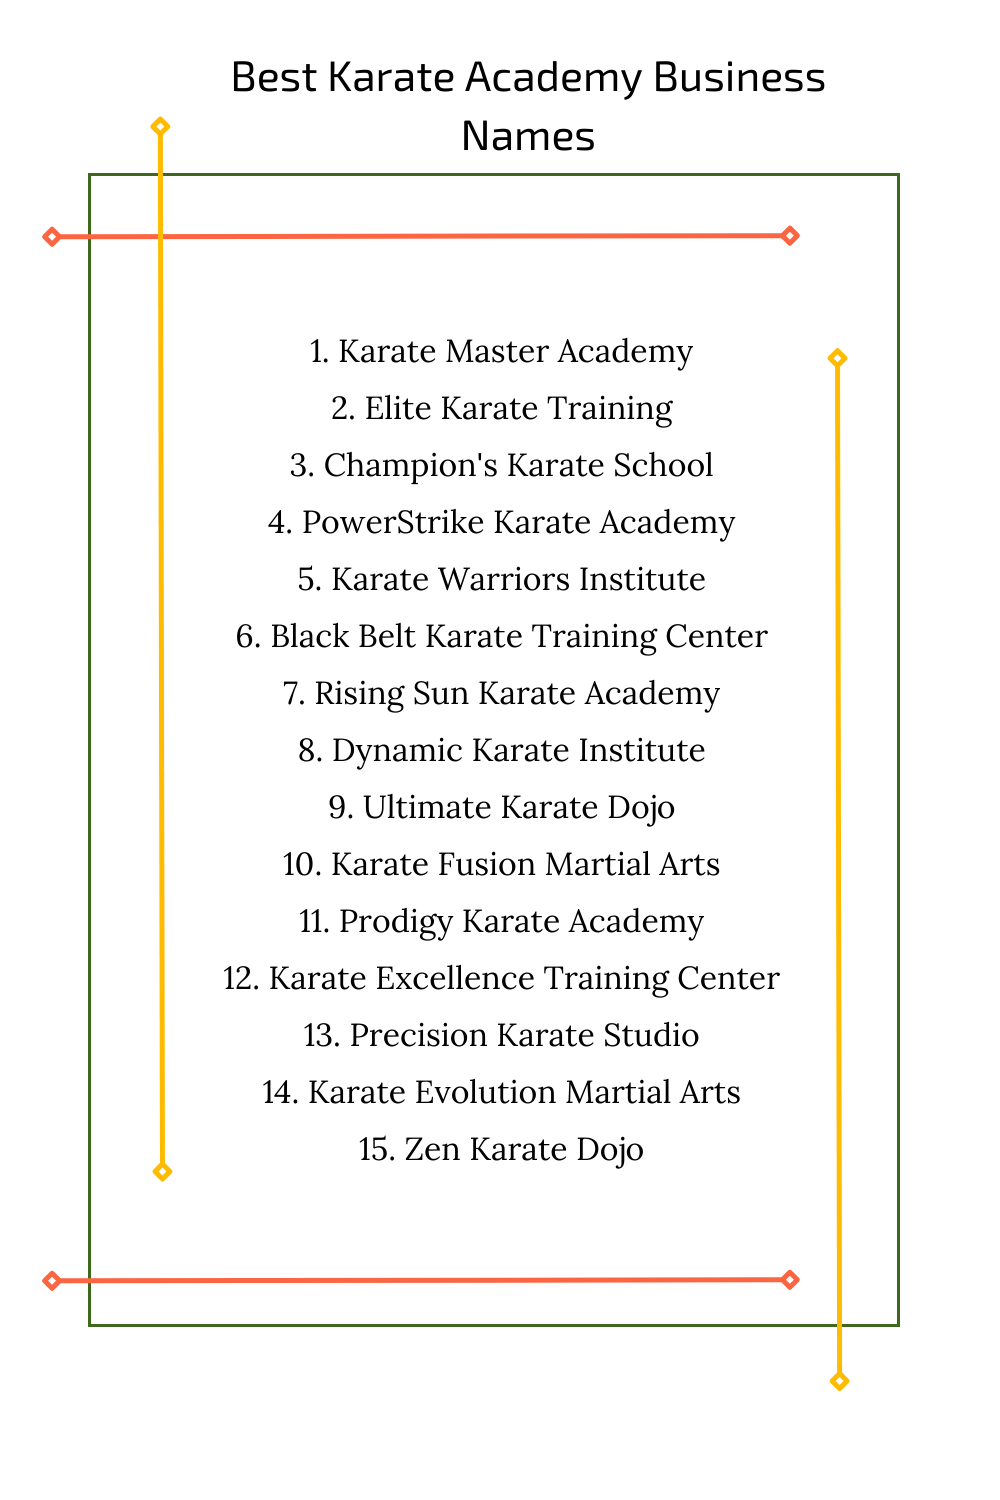 Best Karate Academy Business Names